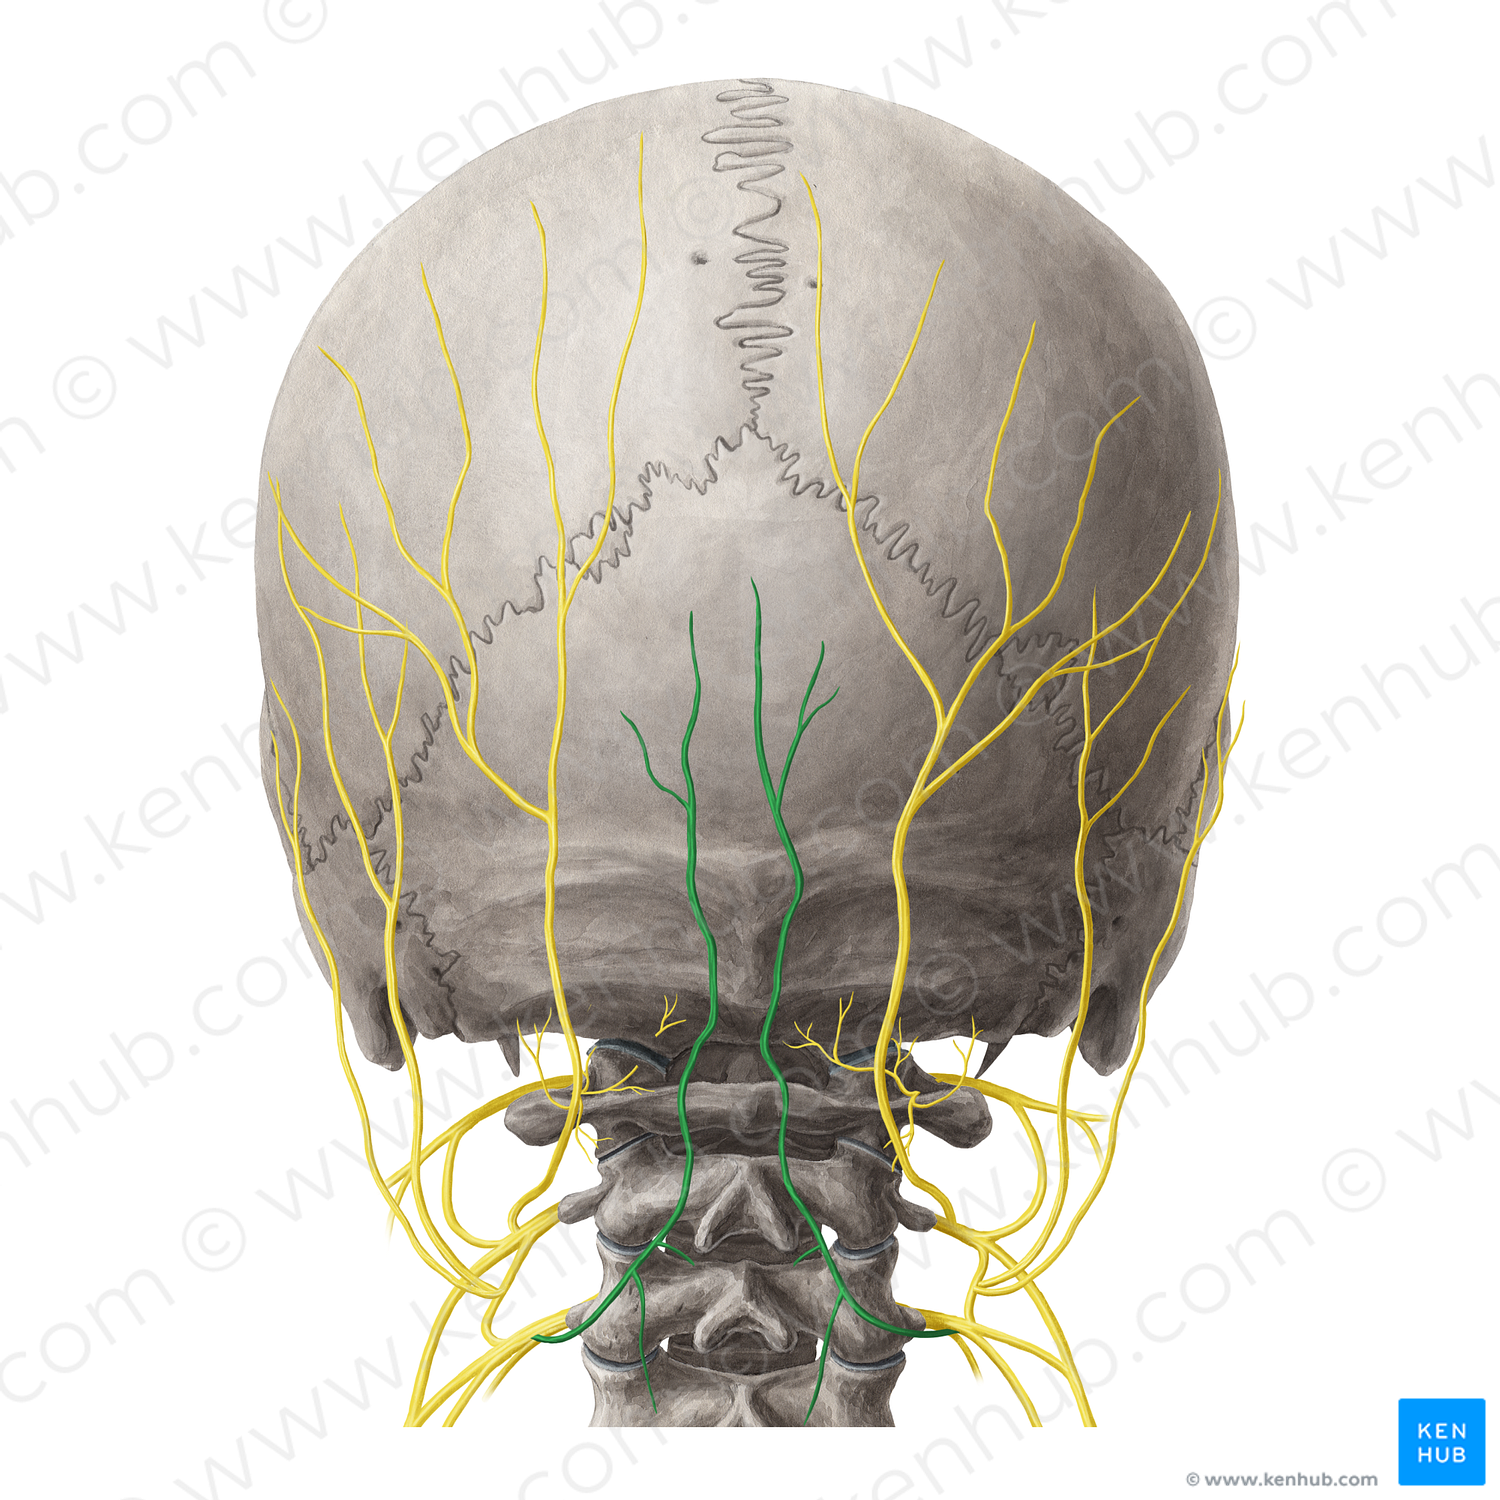 Third occipital nerve (#19230)